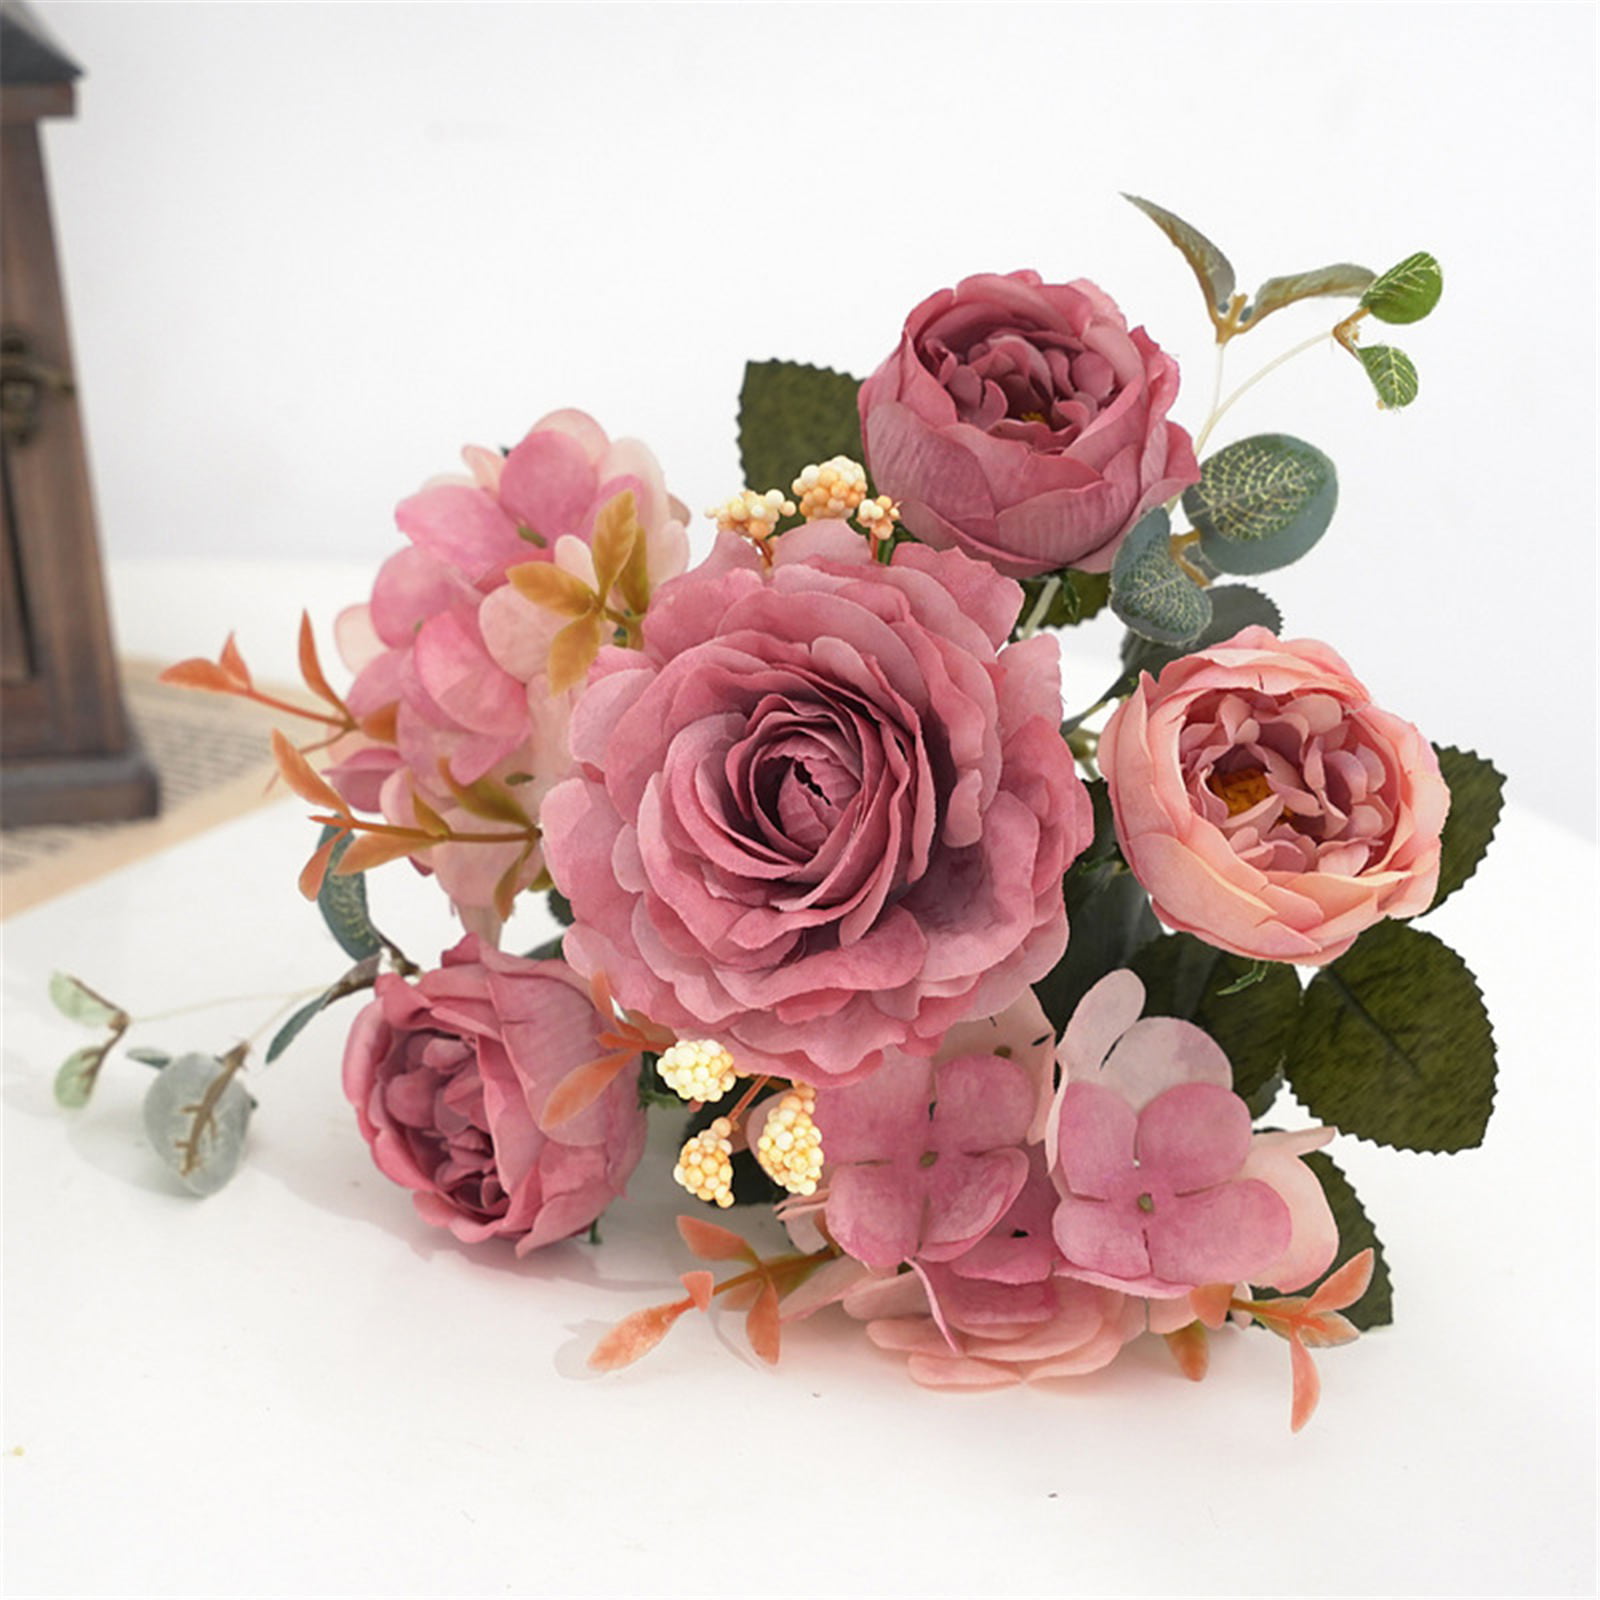 Heiheiup Artificial Flower Flowers Rose Wedding Bouquetss Floral